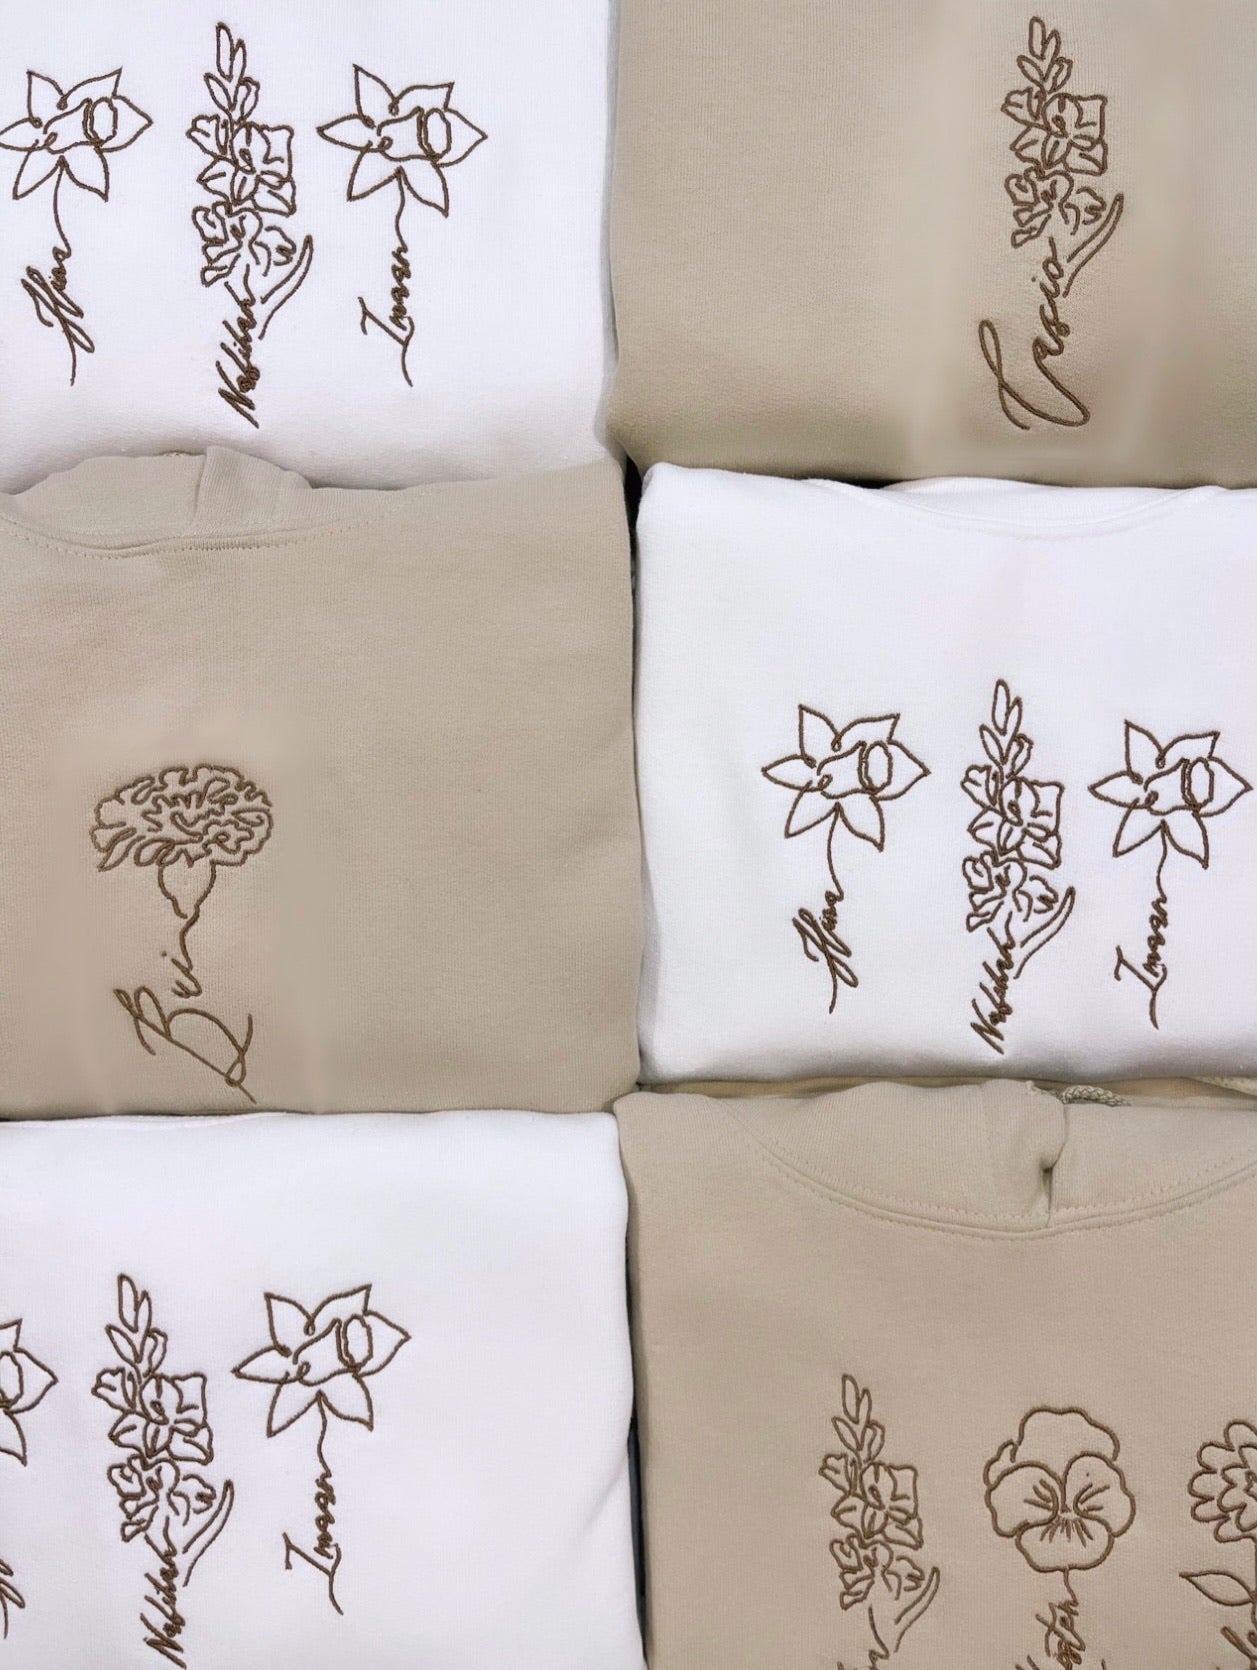 Custom Embroidered Birth Flower Sweatshirts